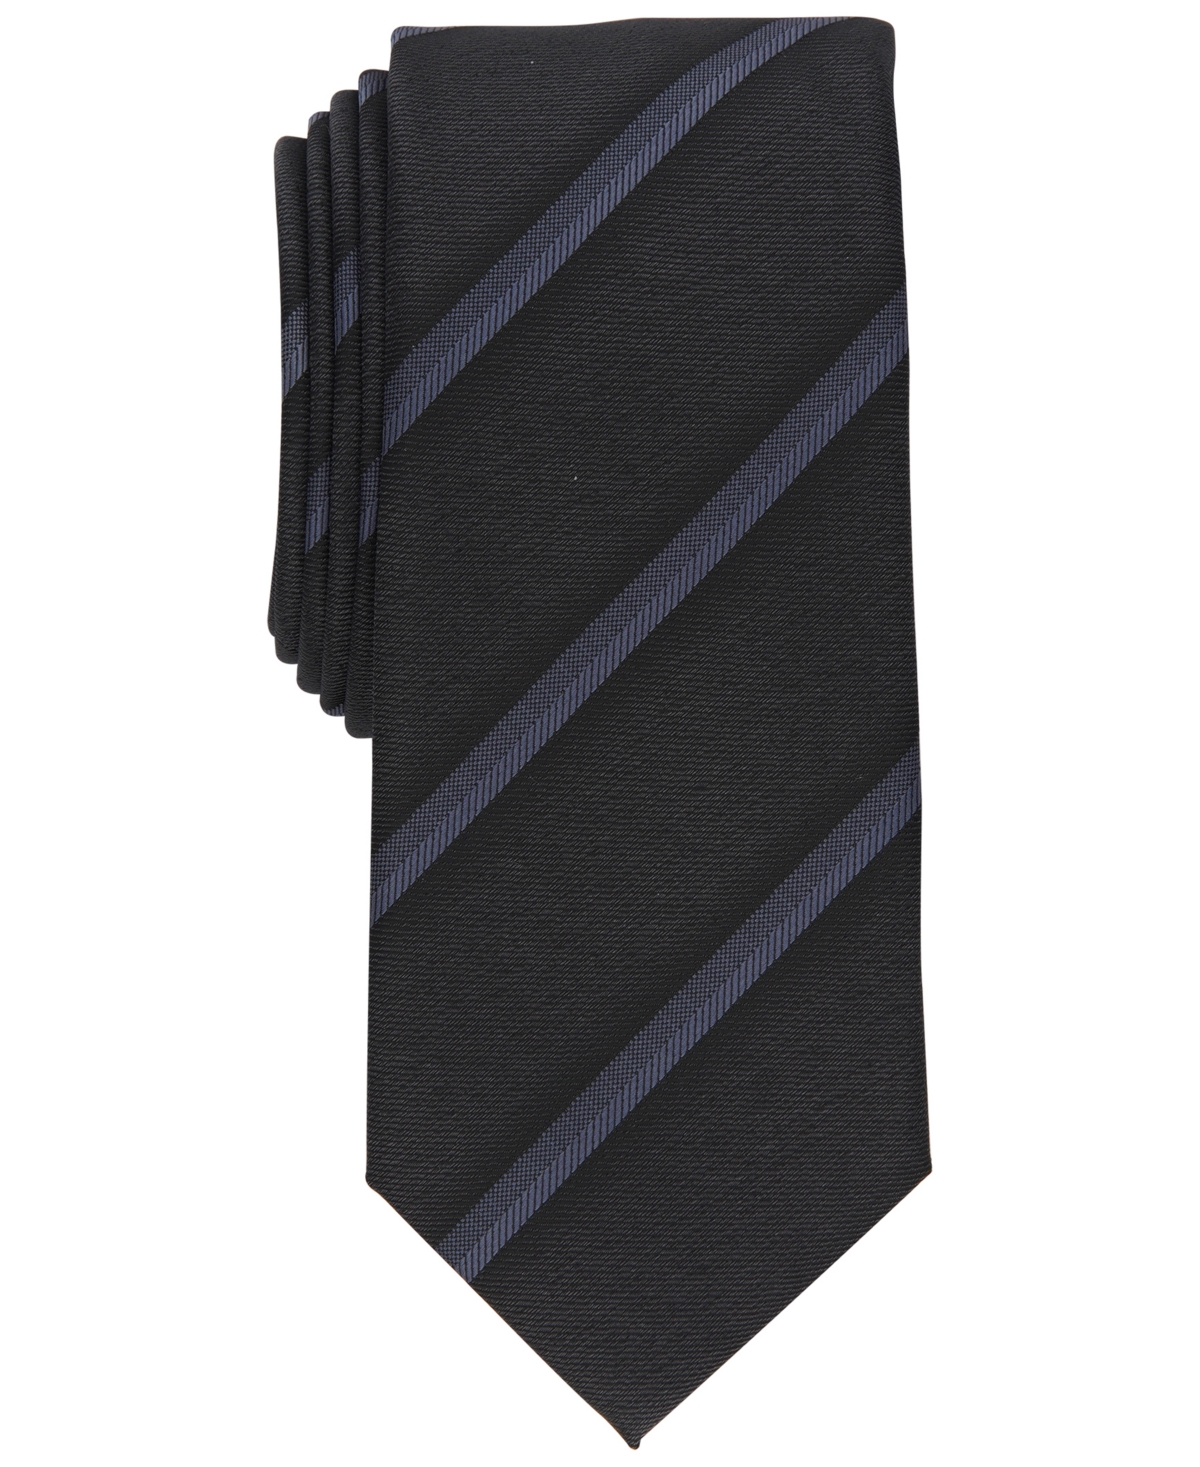 Men's Desmet Striped Slim Tie, Created for Macy's - Dark Navy